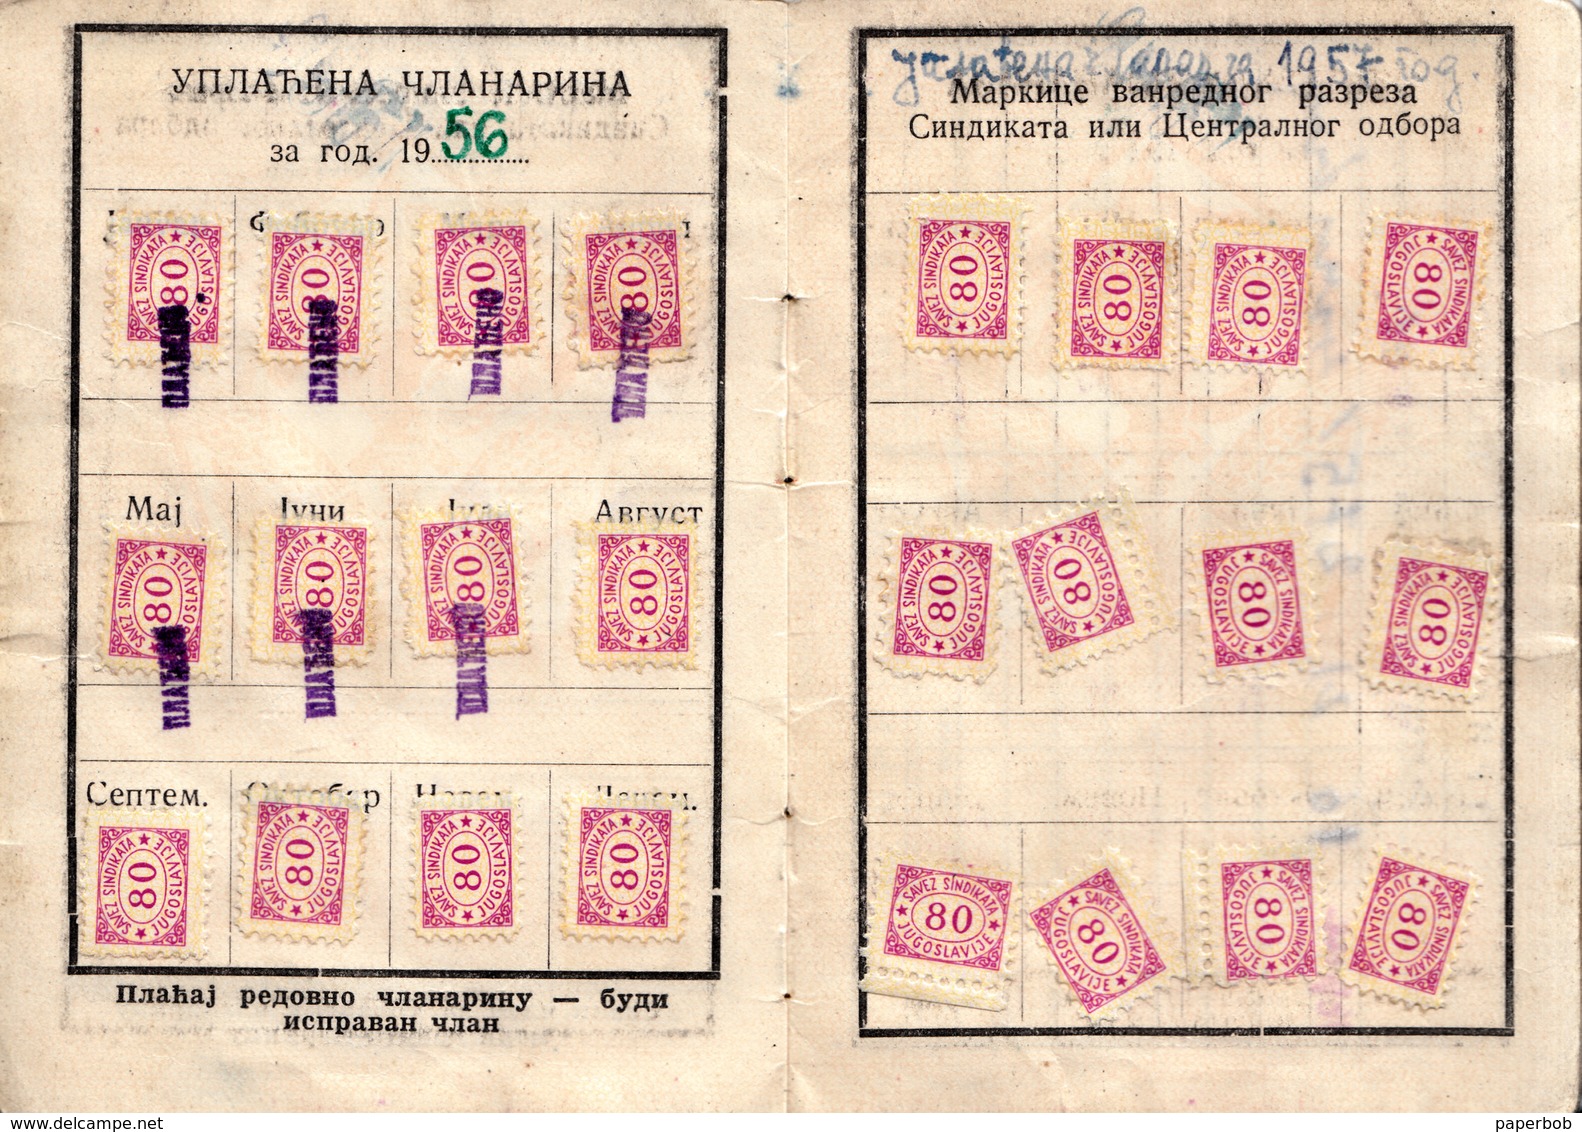 SINDICATE OF YUGOSLAVIA 1955 - Beneficiencia (Sellos De)